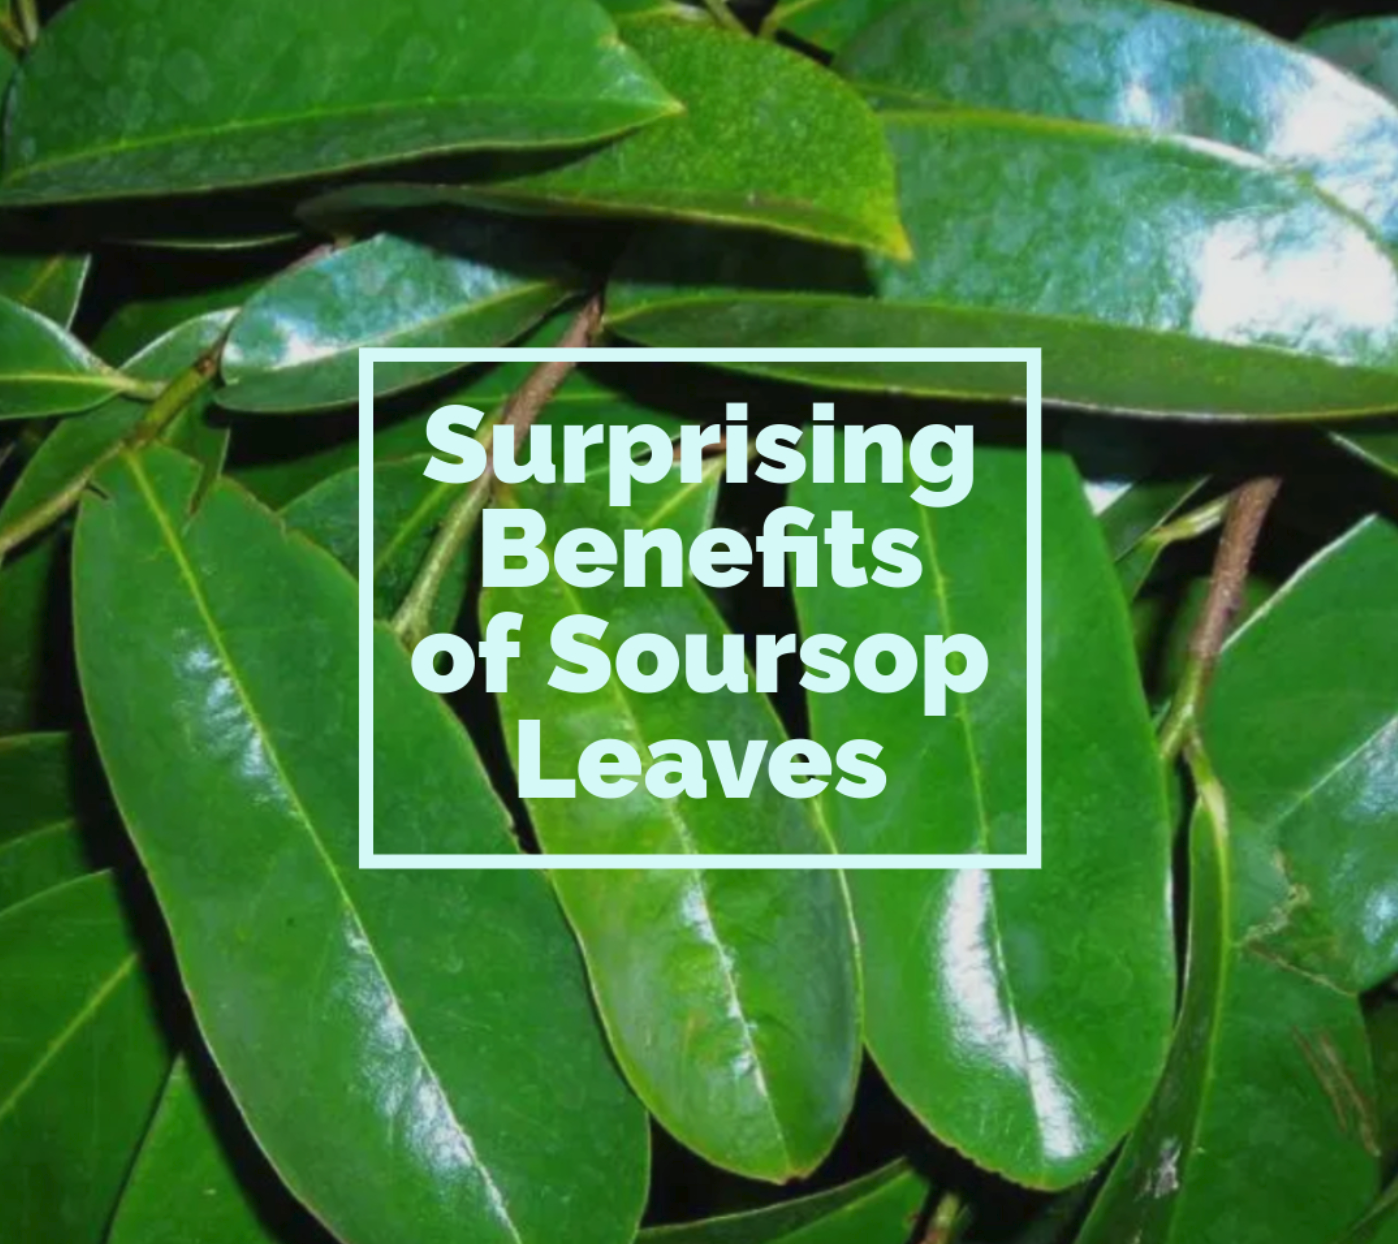 Health Benefits of Soursop leaf tea